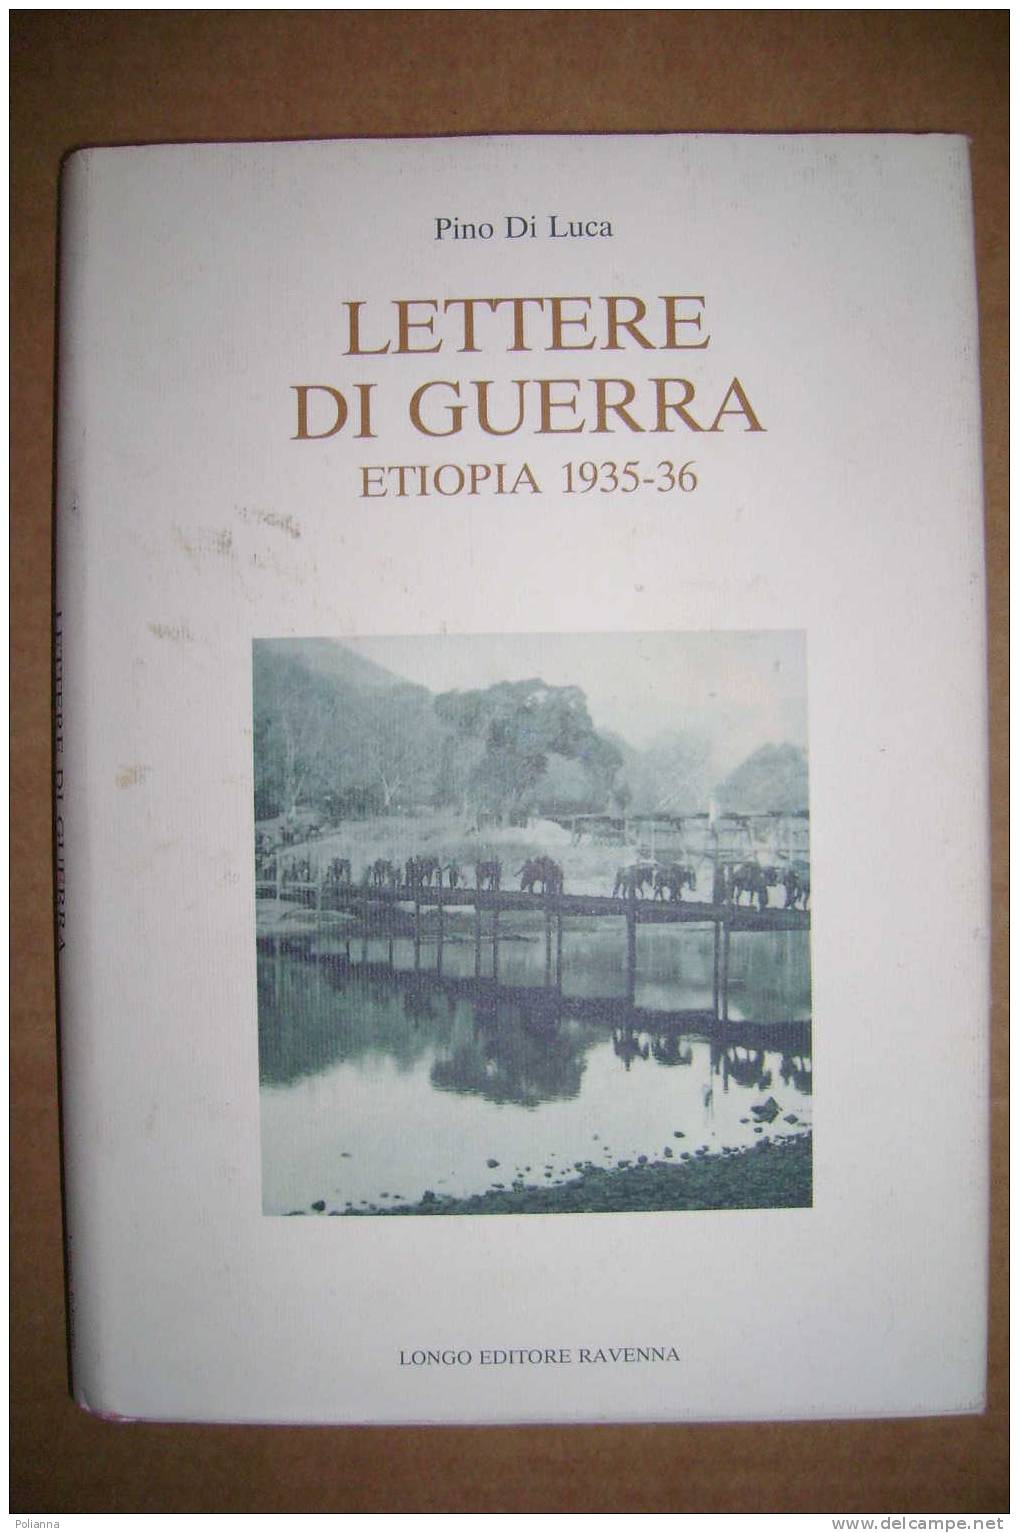 PDH/30 P.Di Luca LETTERE DI GUERRA-ETIOPIA 1935-36 Longo Editore 1994 - History, Biography, Philosophy